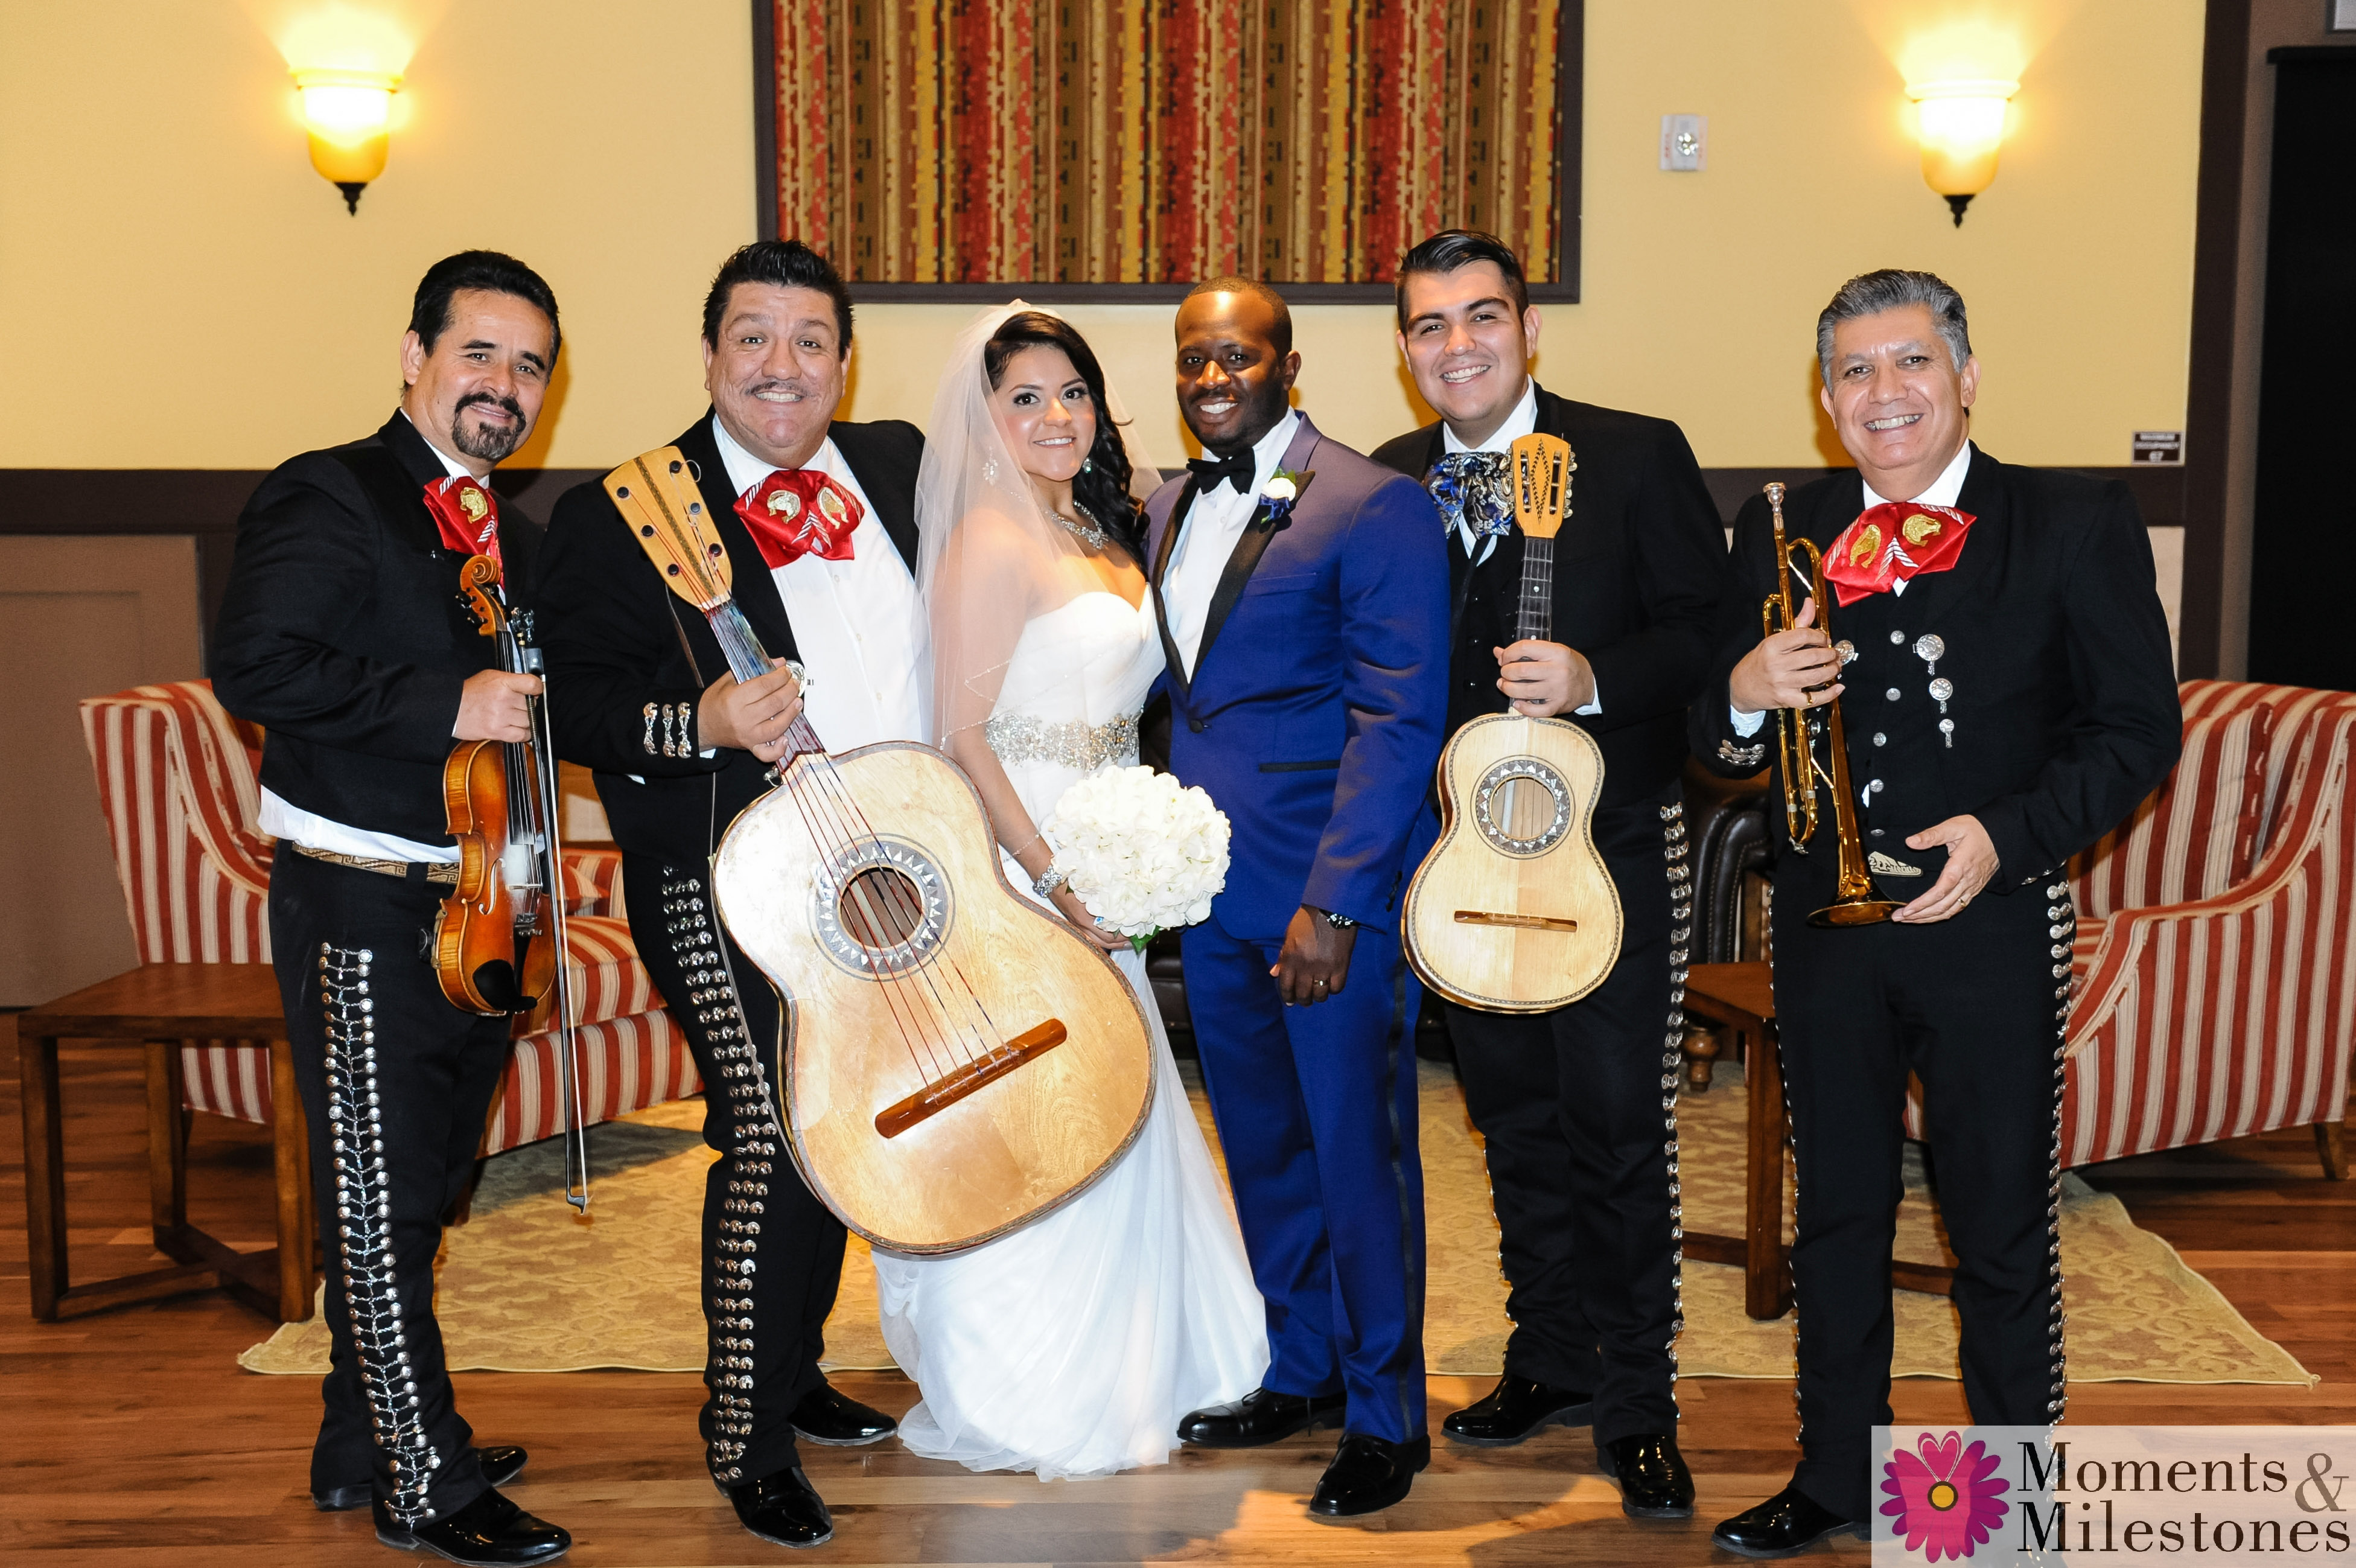 San Antonio NOAH'S Event Venue Wedding Planning and Wedding Photography